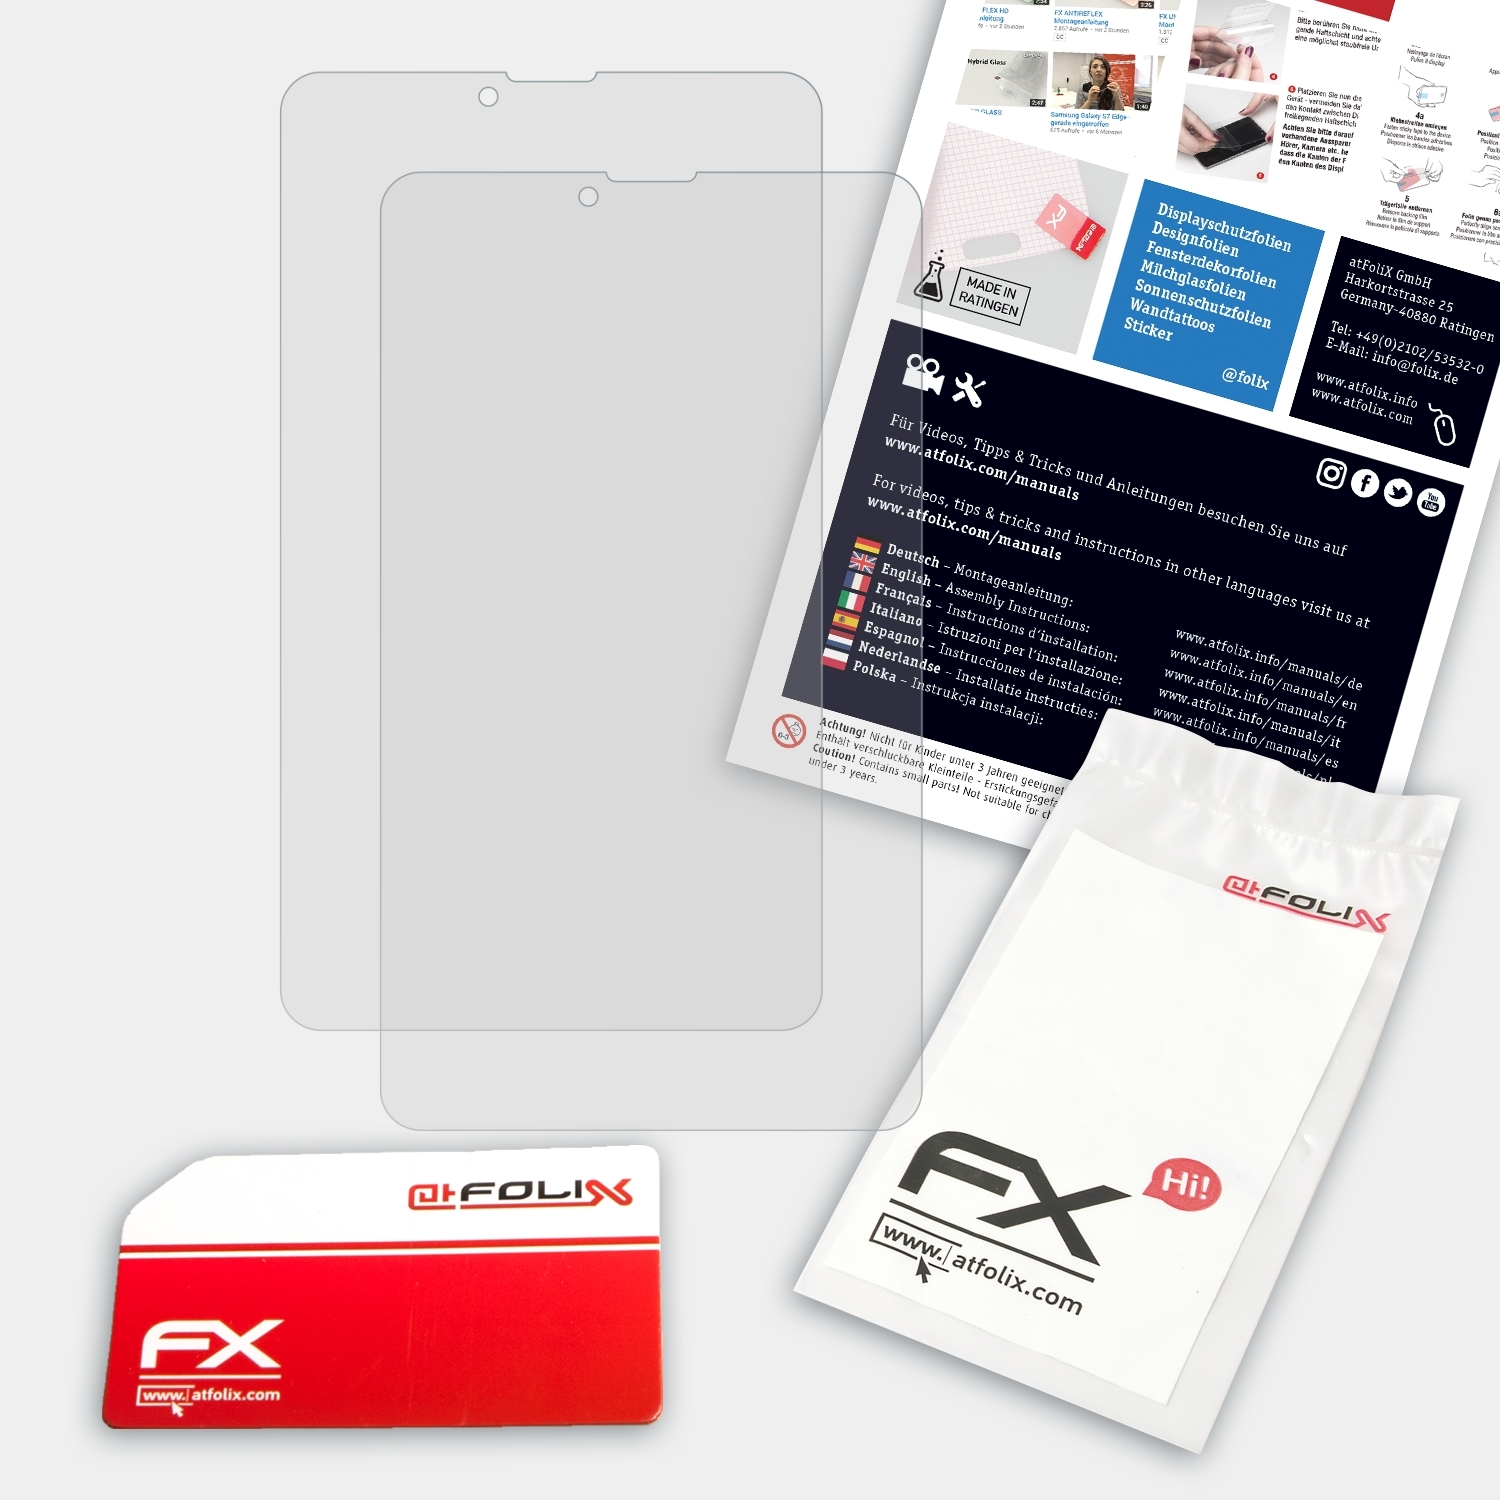 Displayschutz(für JAY-tech ATFOLIX XTE7D) 2x Tablet-PC FX-Antireflex